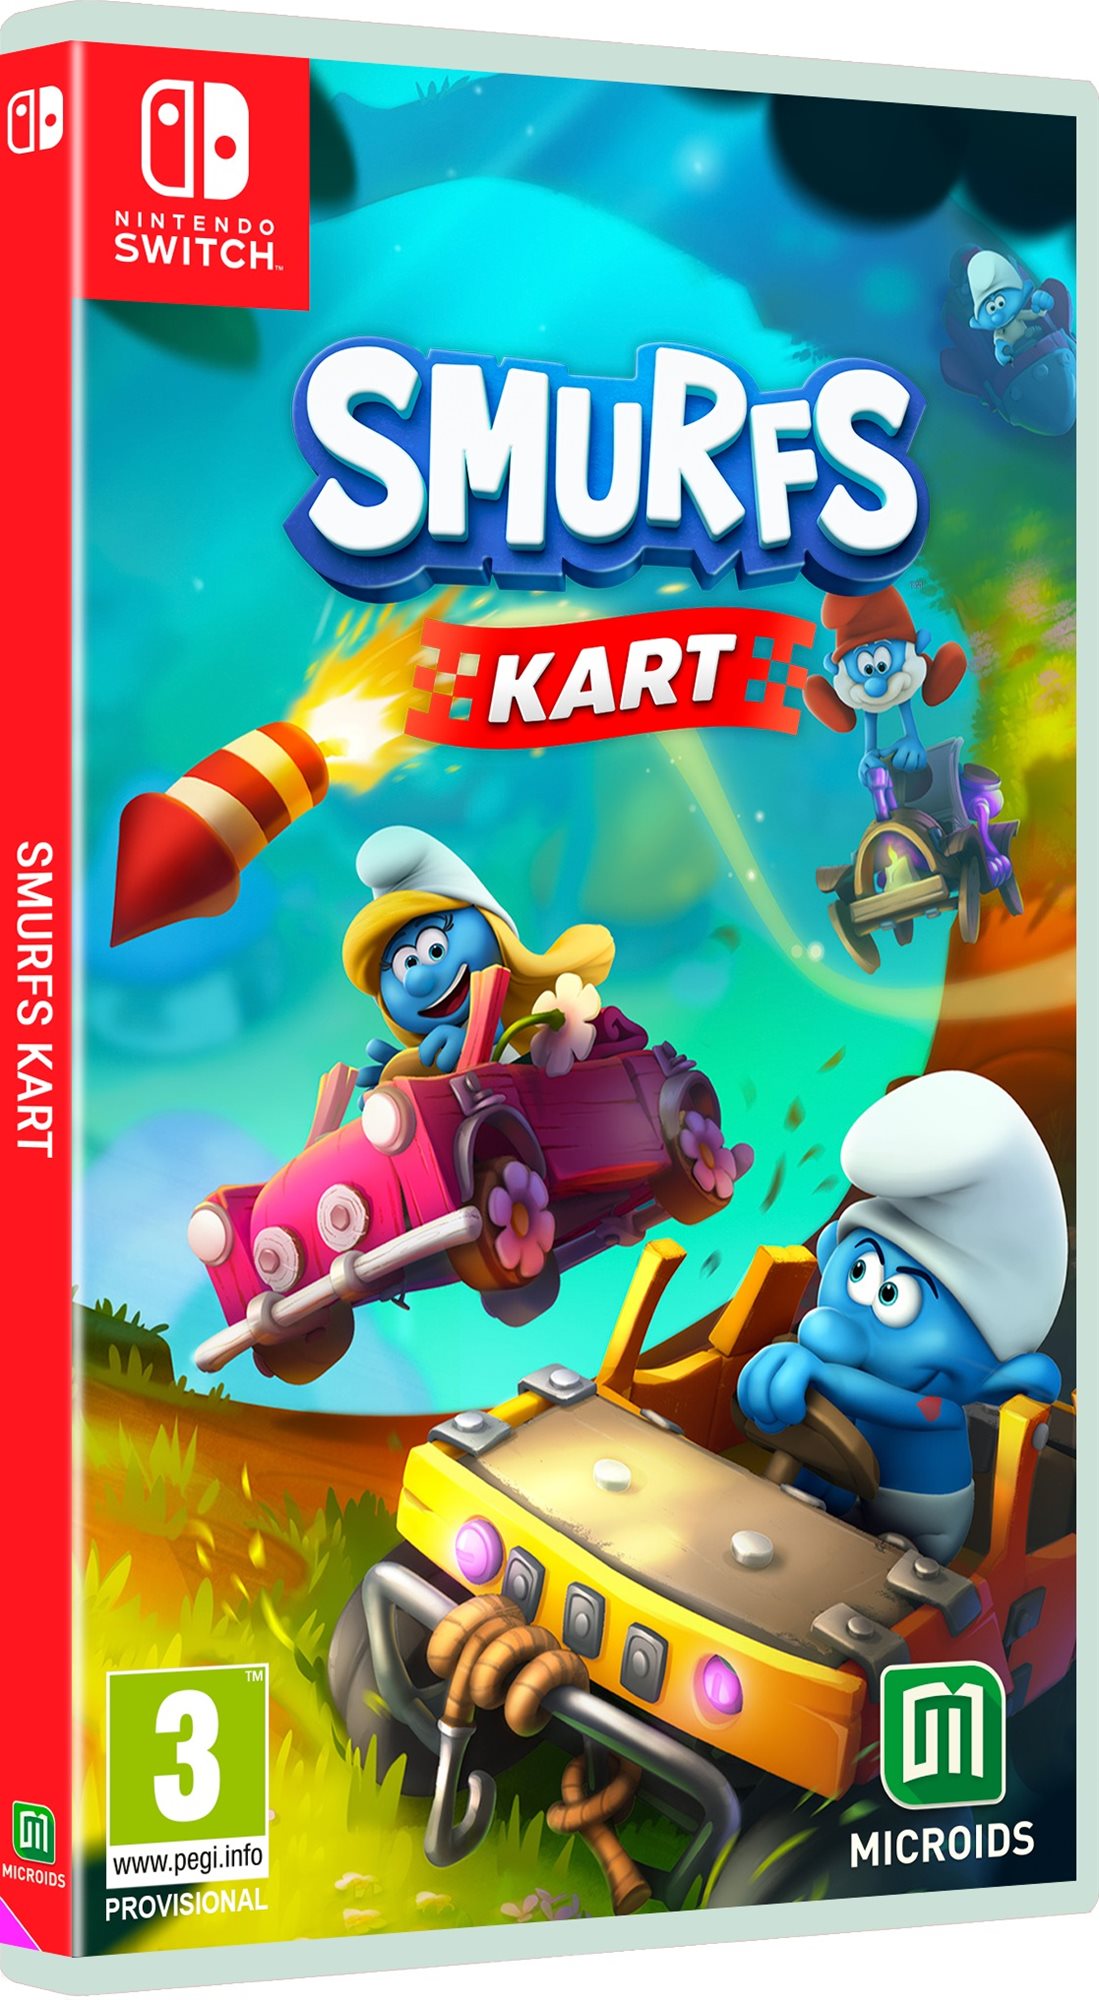 Smurfs Kart Turbo Edition - Nintendo Switch